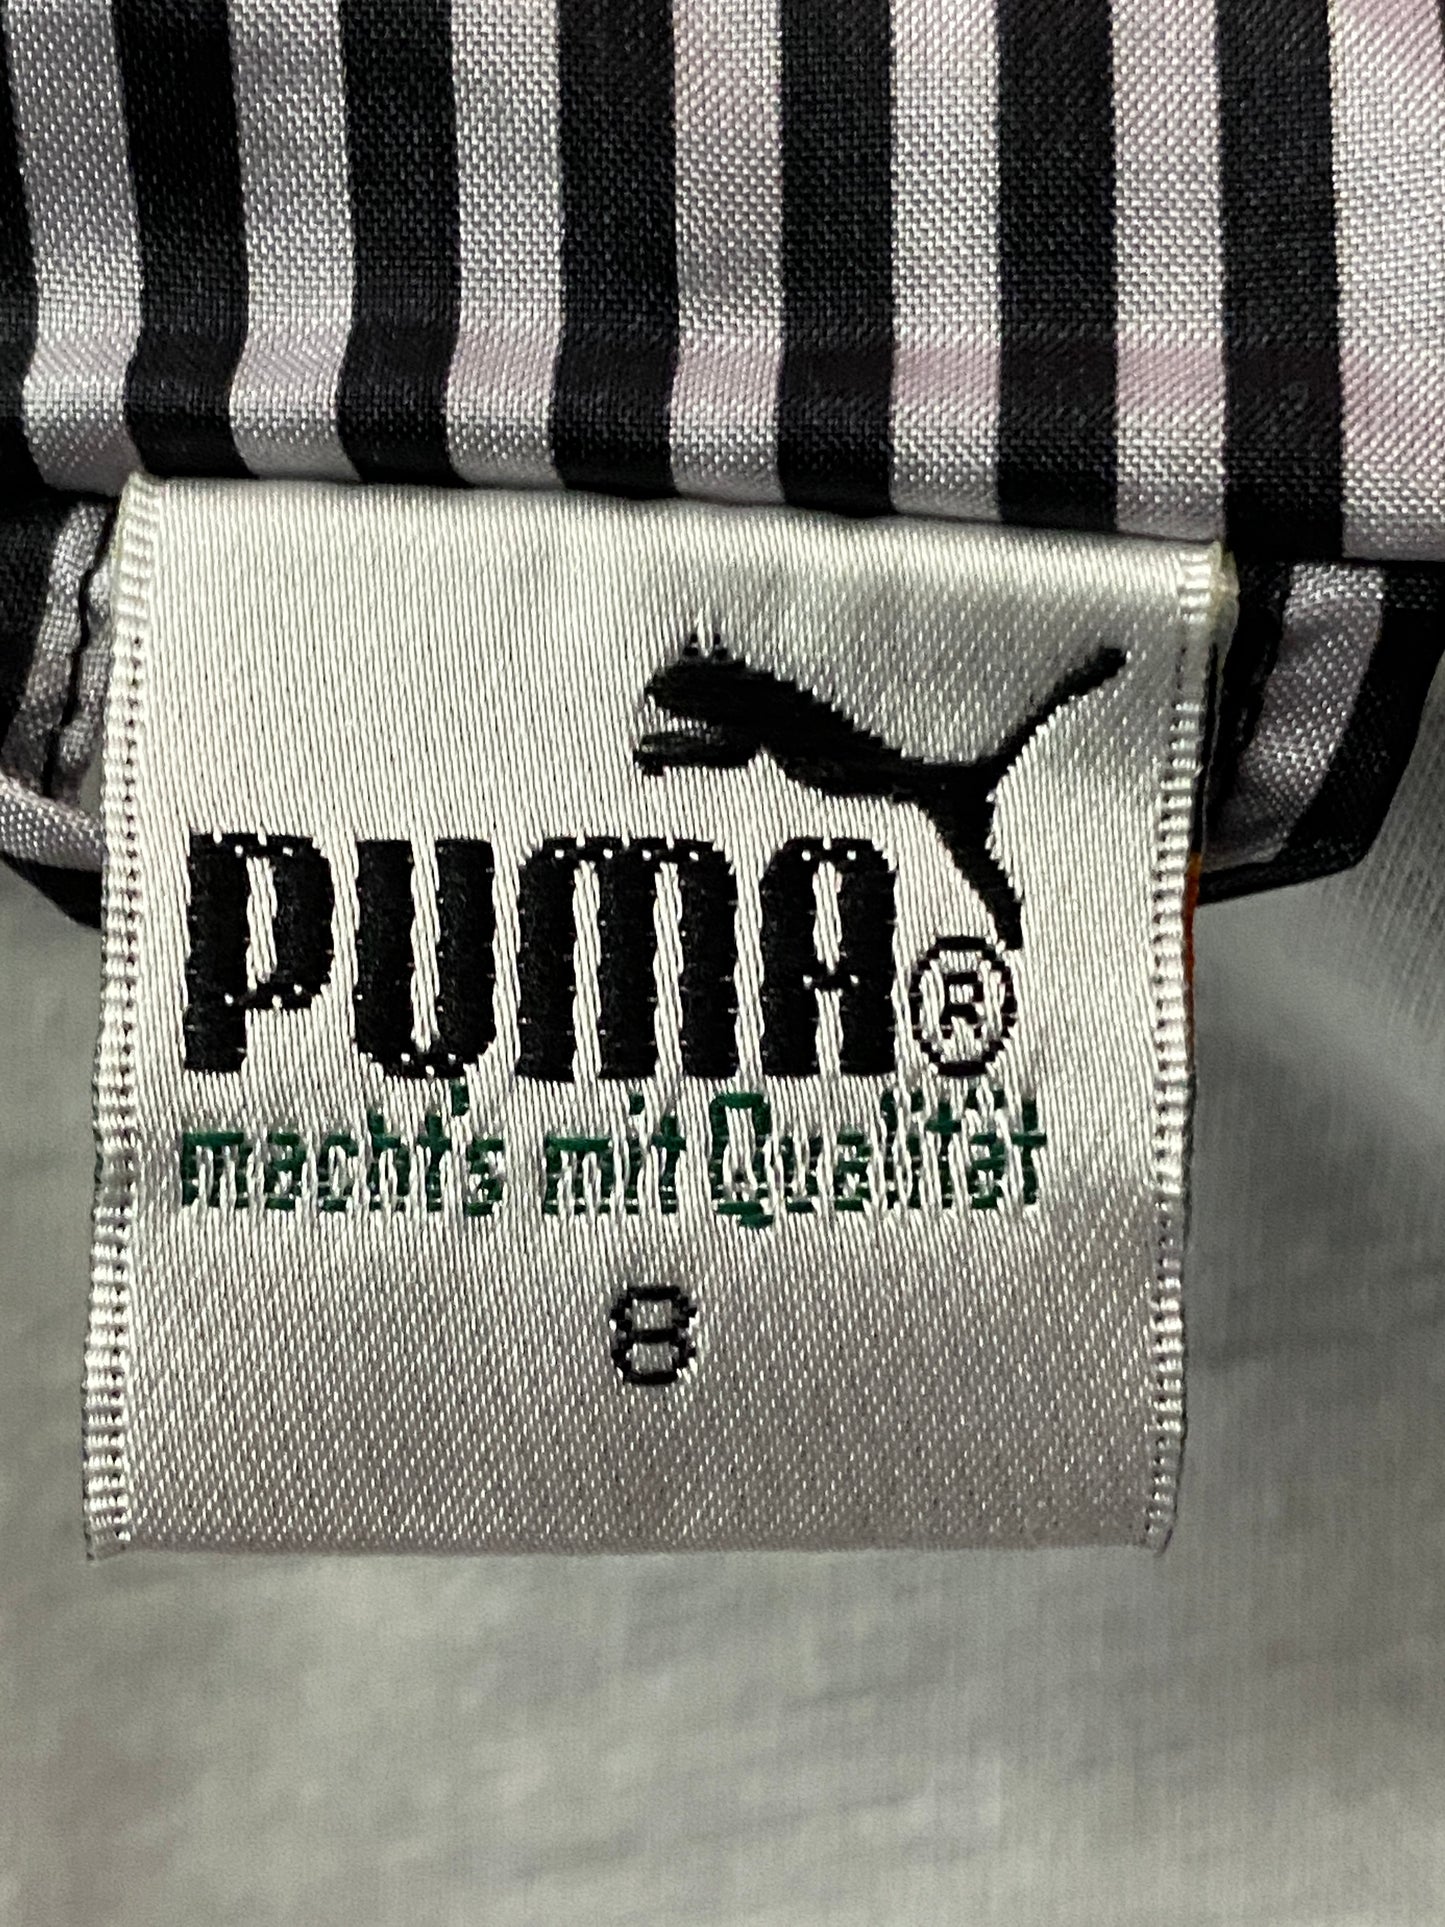 90s Puma Vintage Men's Windbreaker Jacket - Large Blue & Black Nylon